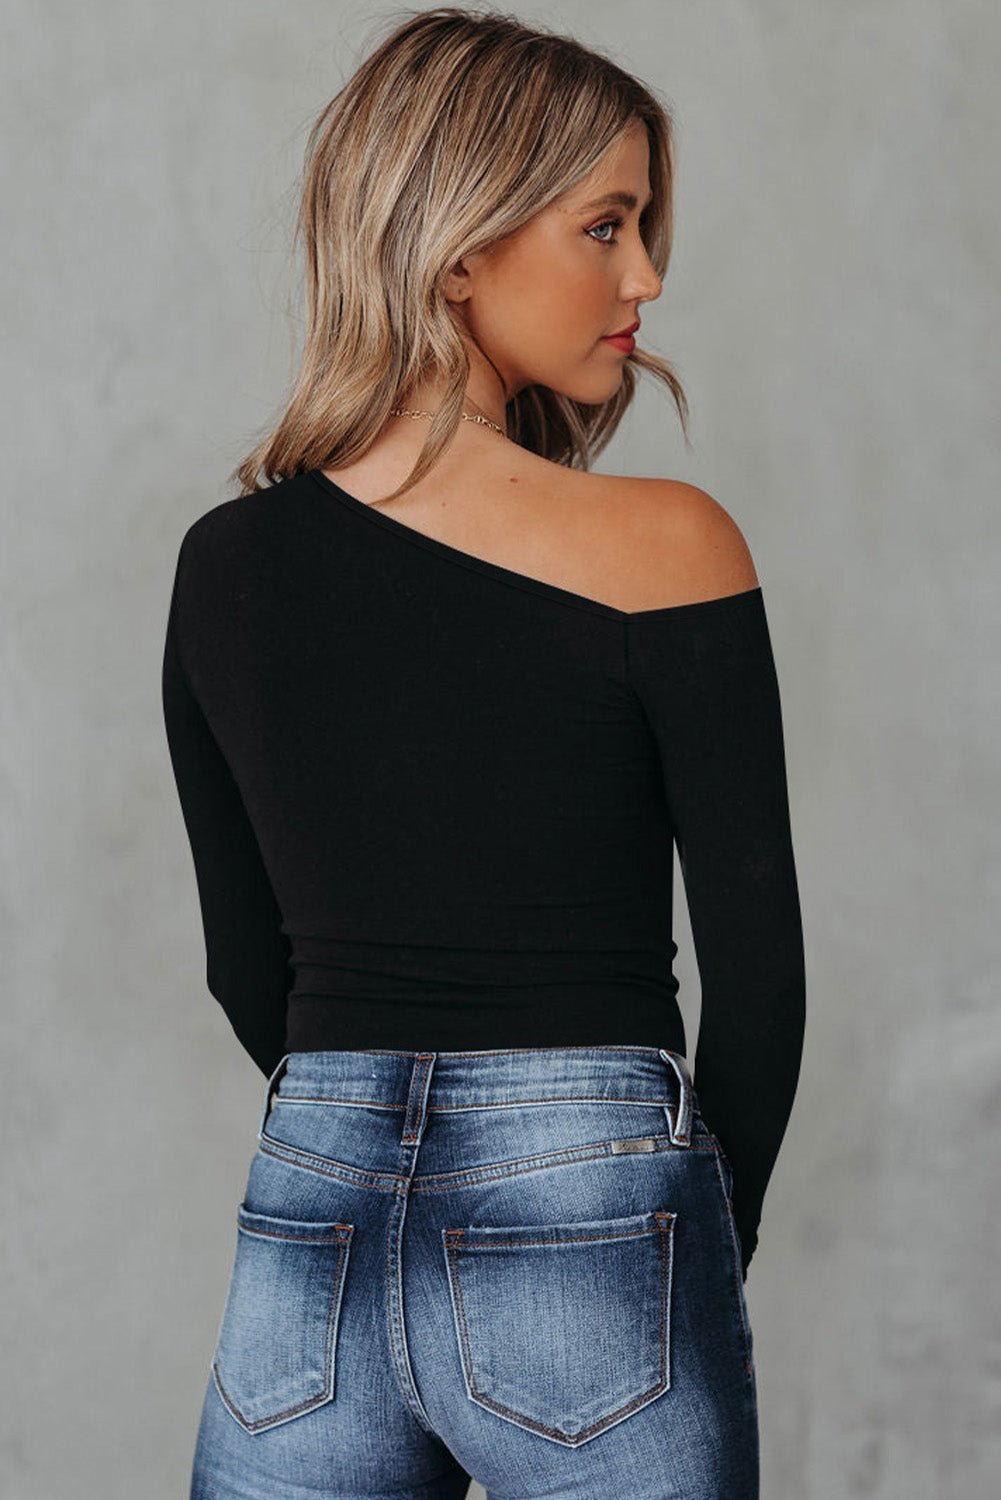 Asymmetrical Neck Long Sleeve Top - Fashion Girl Online Store